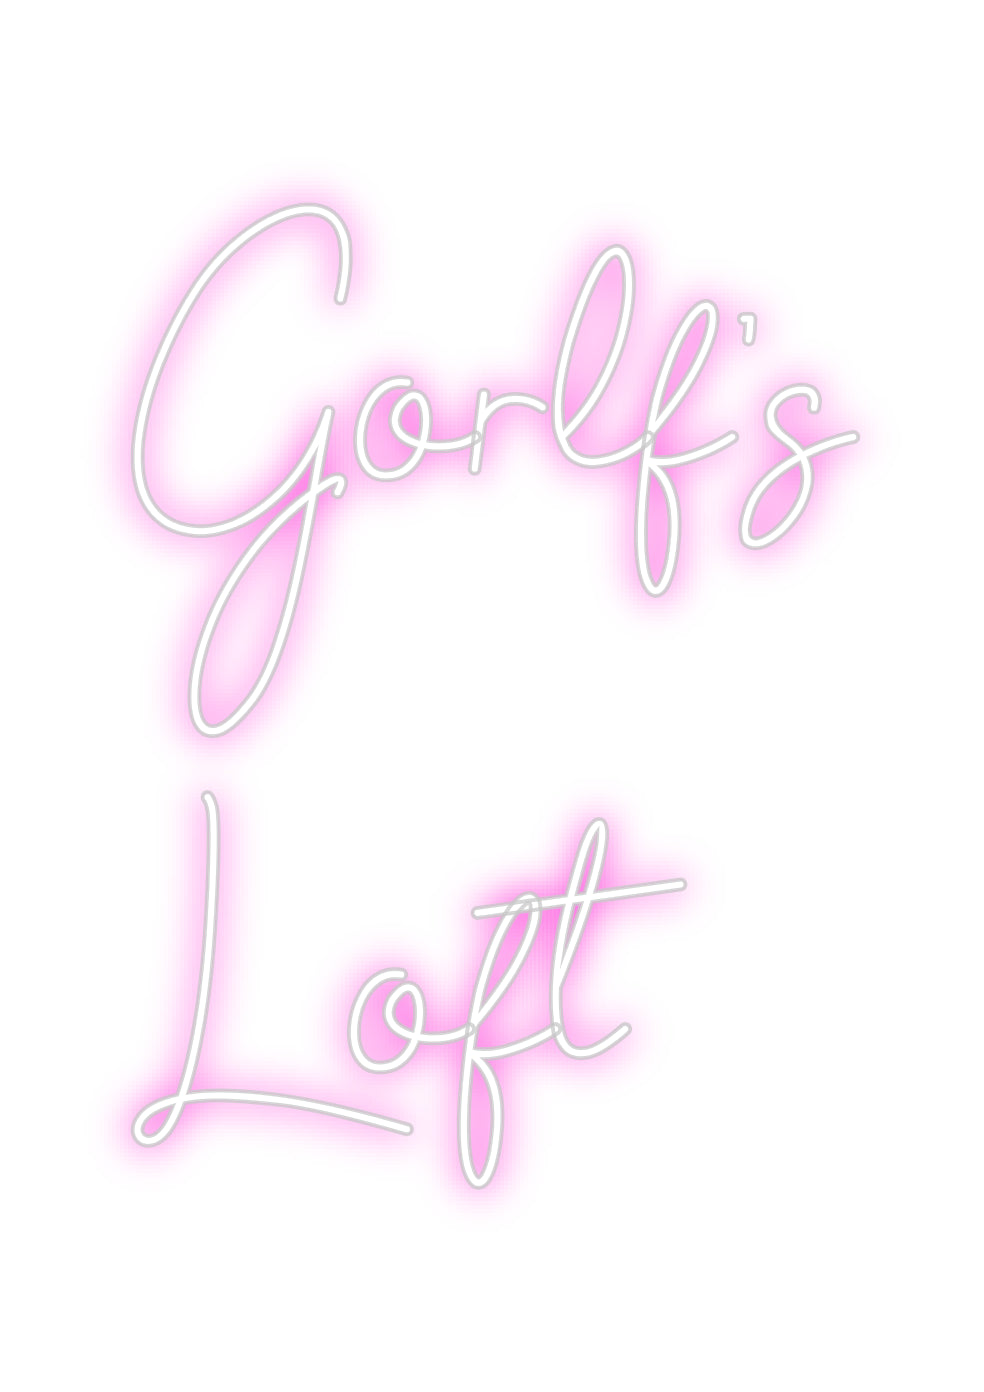 Custom neon sign Gorlf’s 
Loft